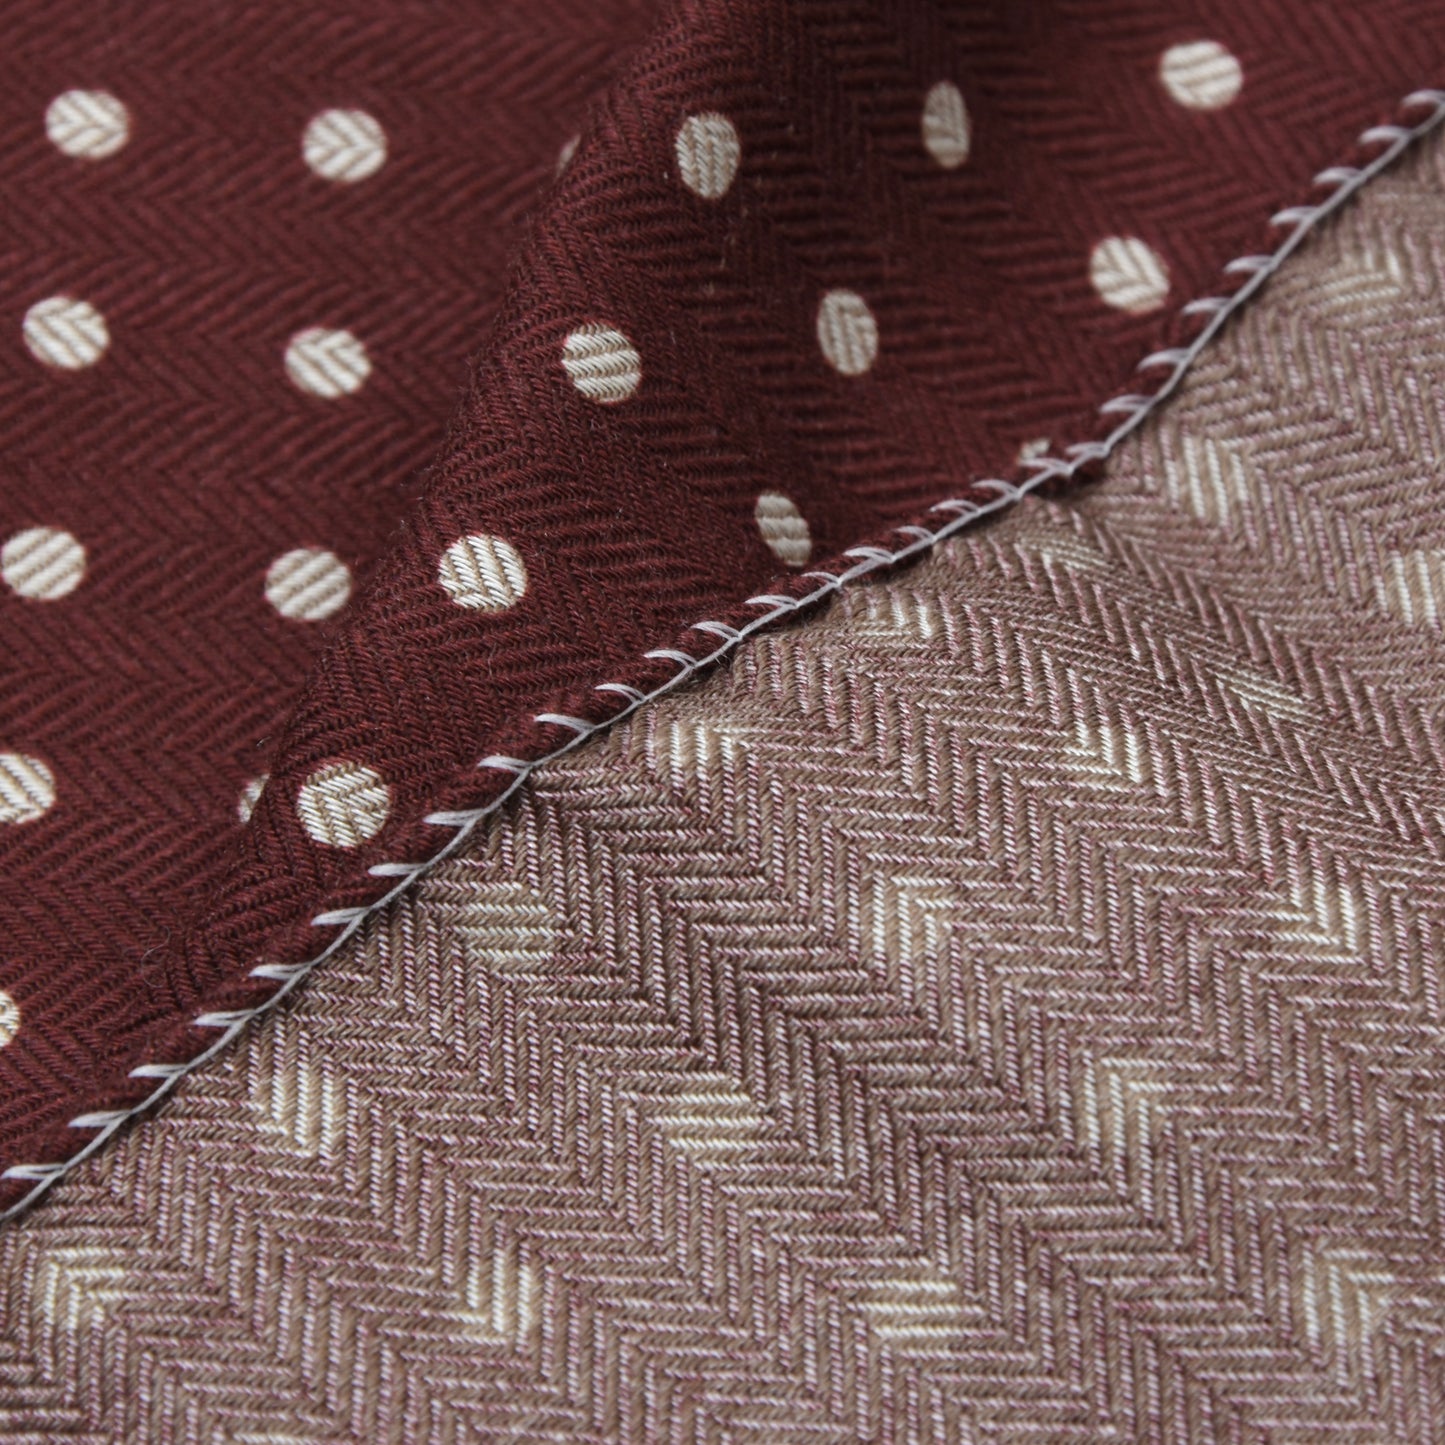 Altea Milano Wool-Silk Pocket Square - Burgundy Polka Dots